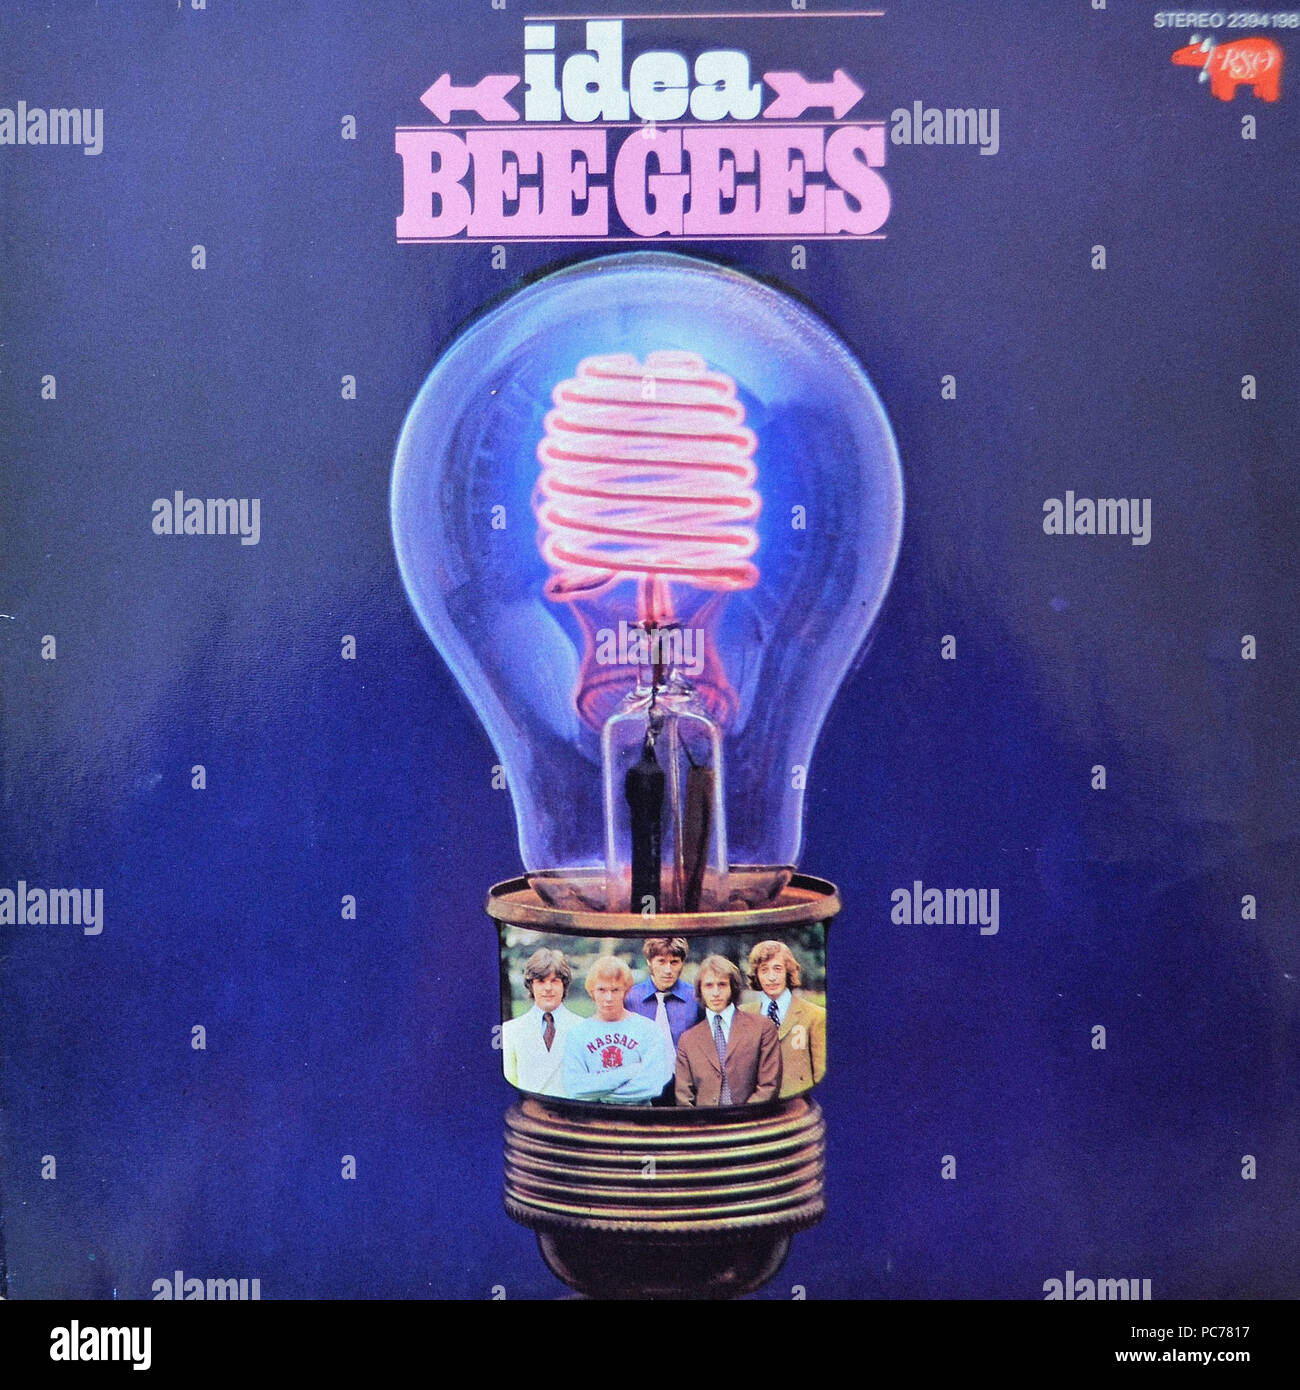 Bee Gees   -  Idea  -  Vintage vinyl album cover Stock Photo